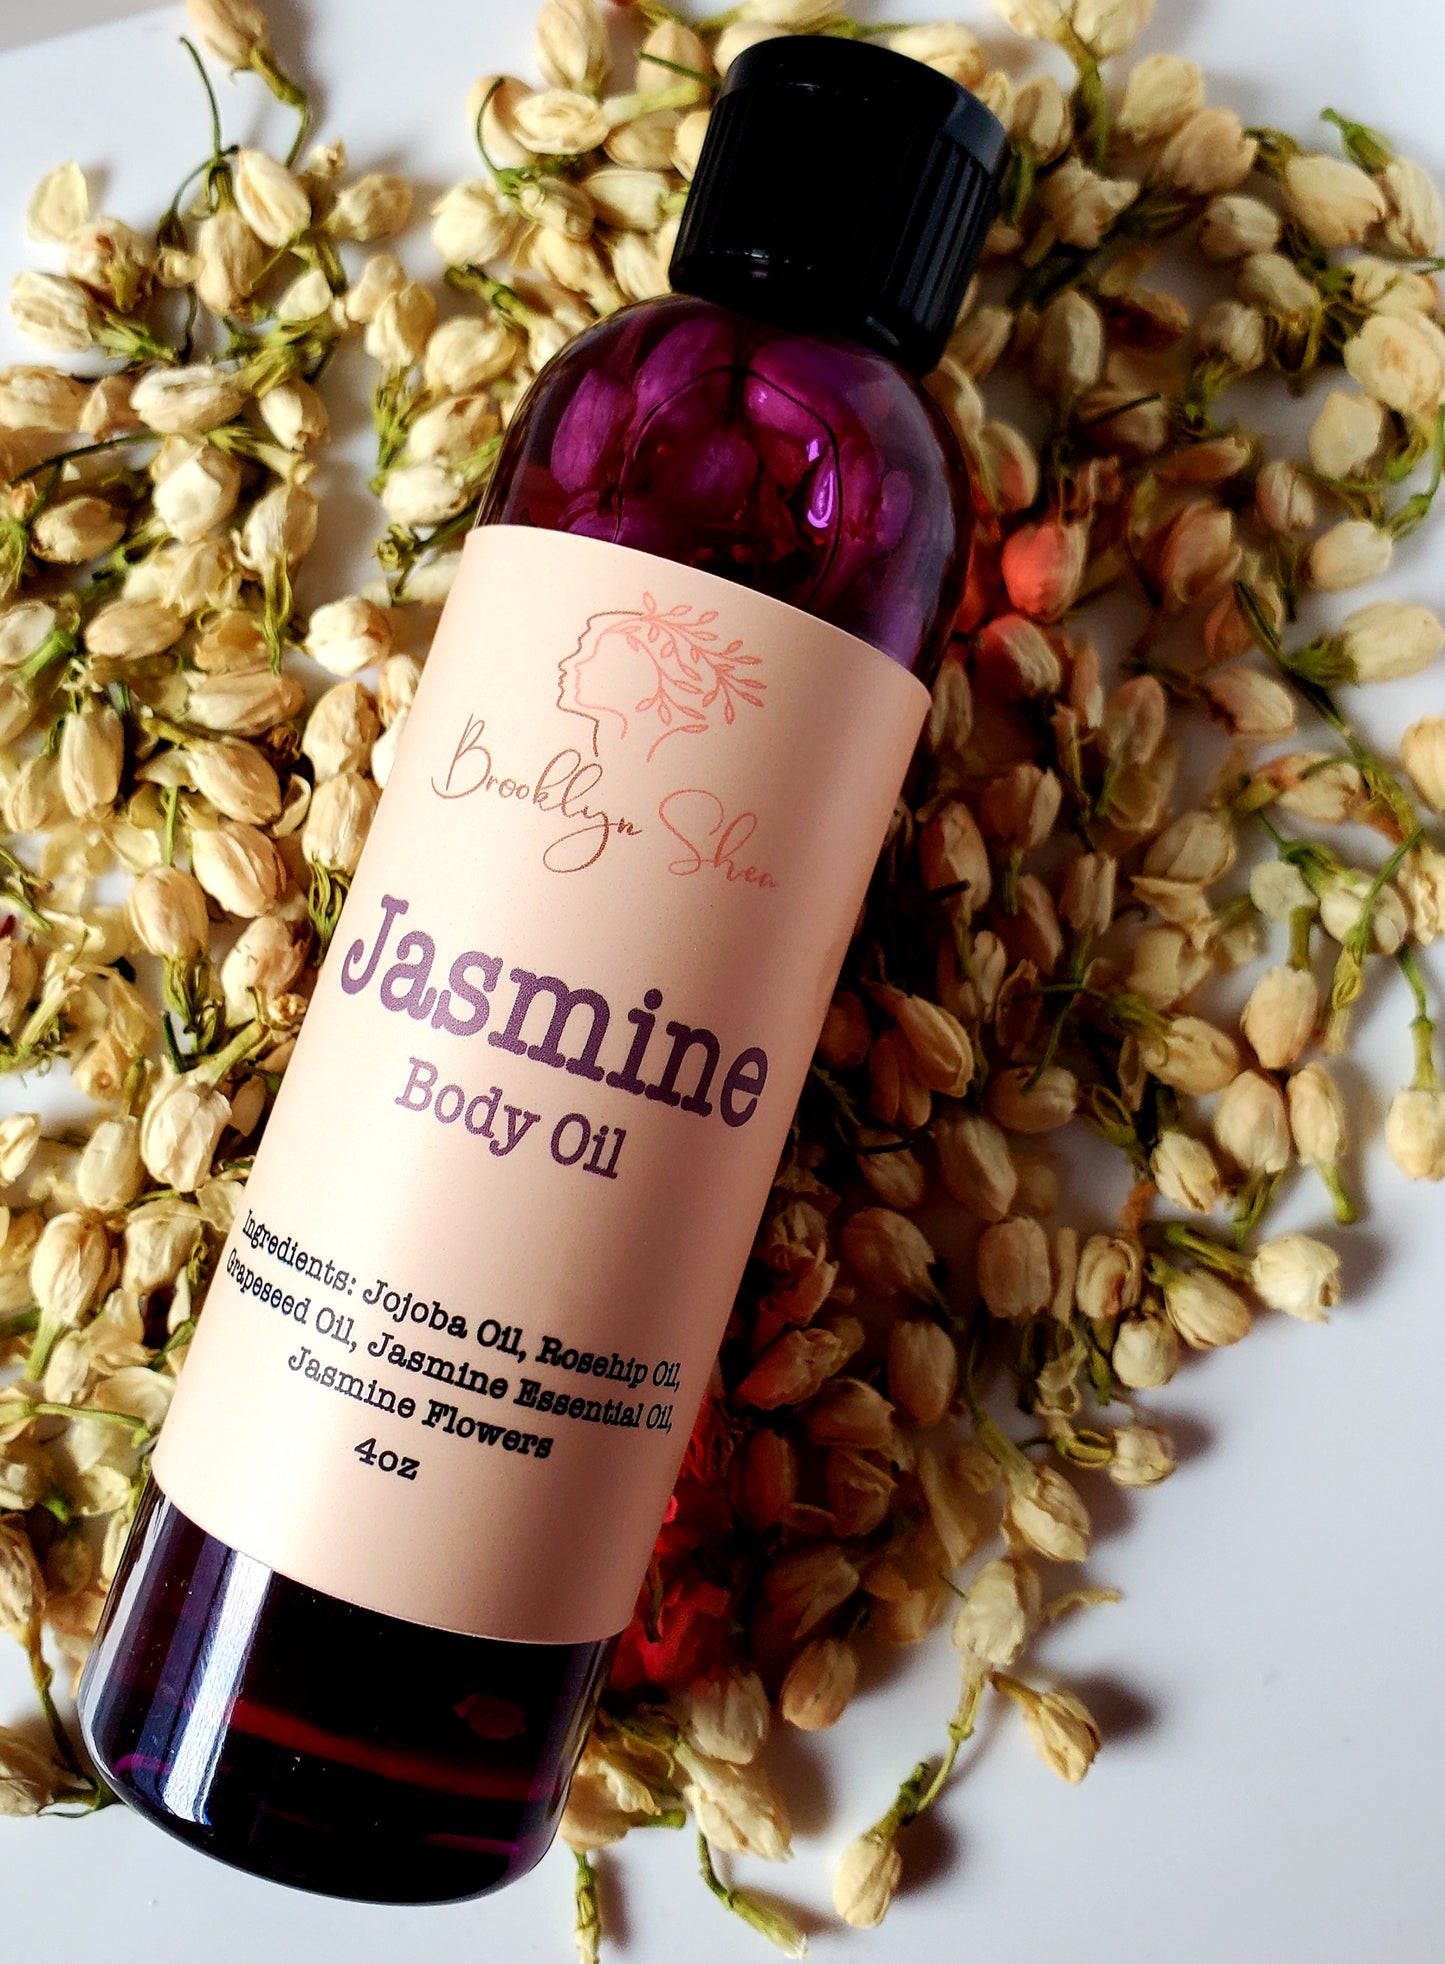 Jasmine (Body Oil)